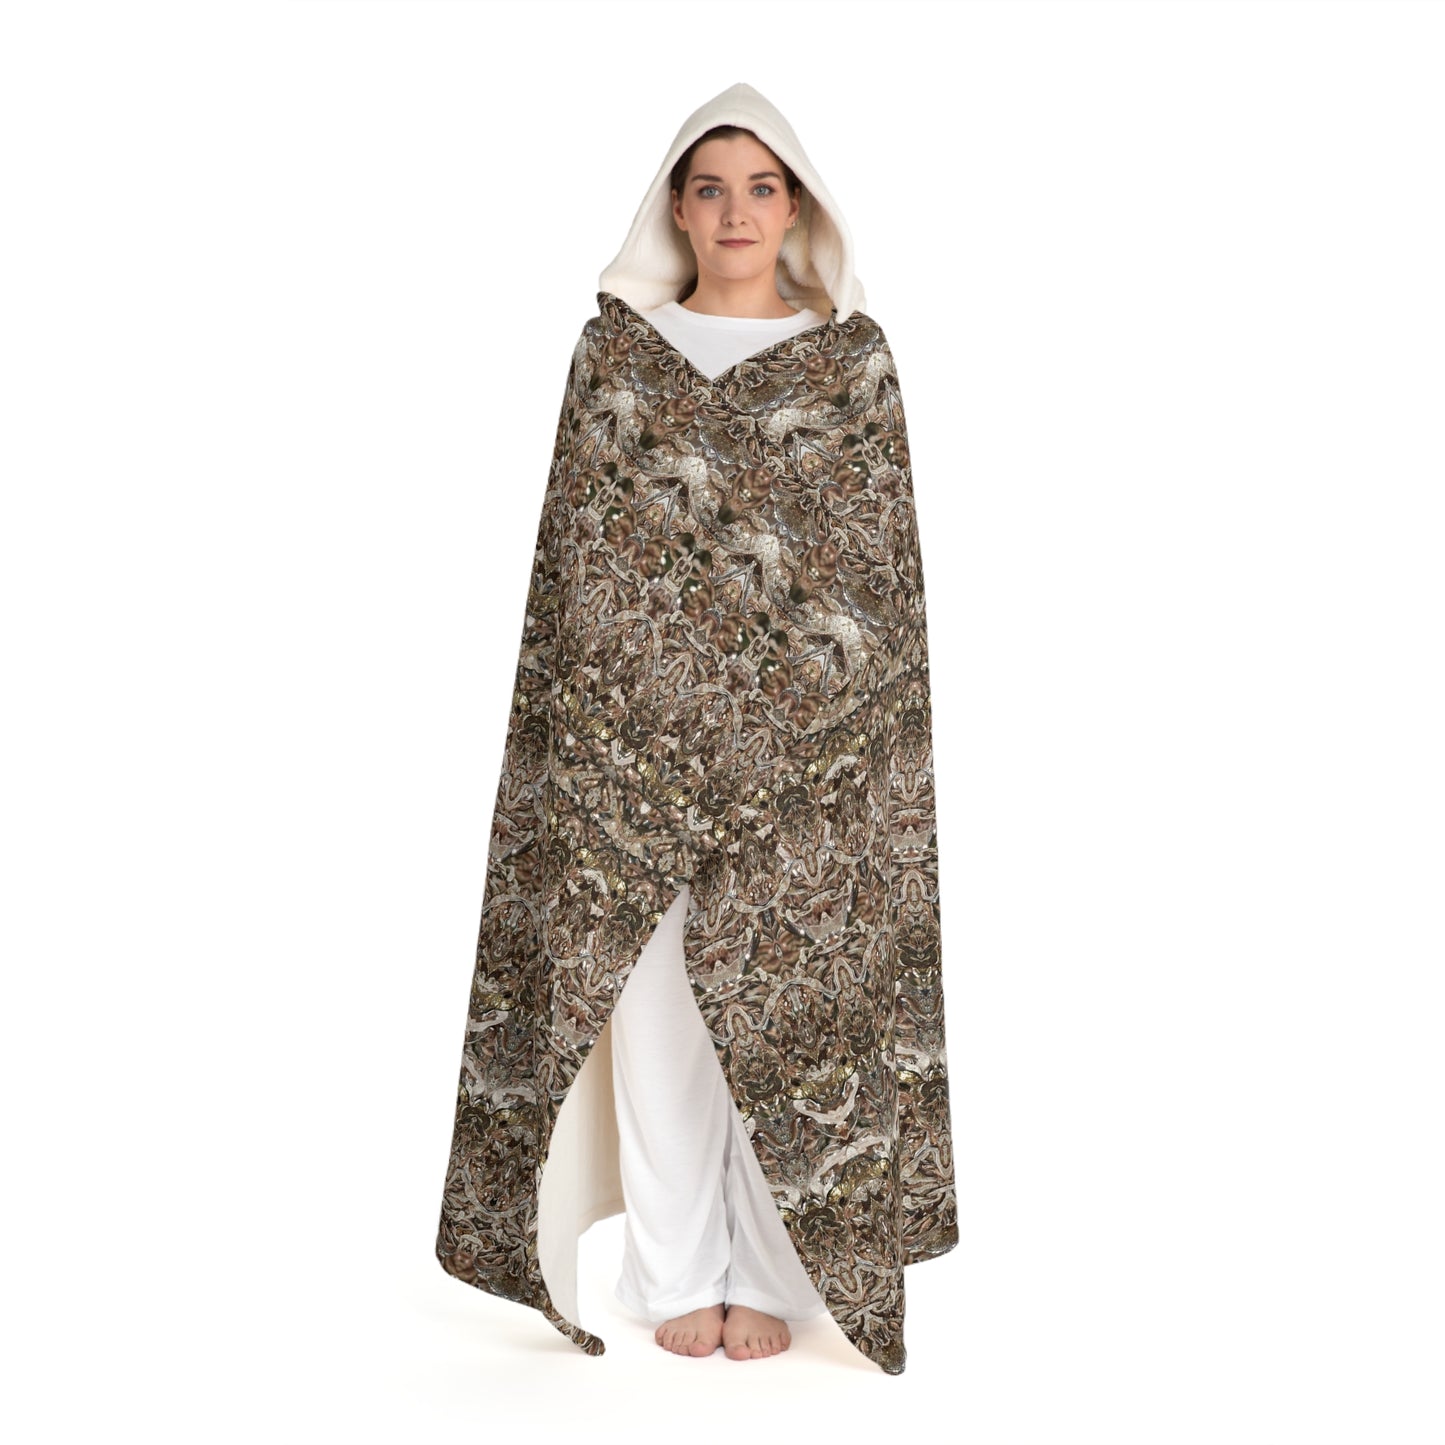 Cream Hooded Sherpa Fleece Blanket (Samhain Dream Thaw 9 of 15 Novem ex Quindecim) RJSTHw2023 RJS